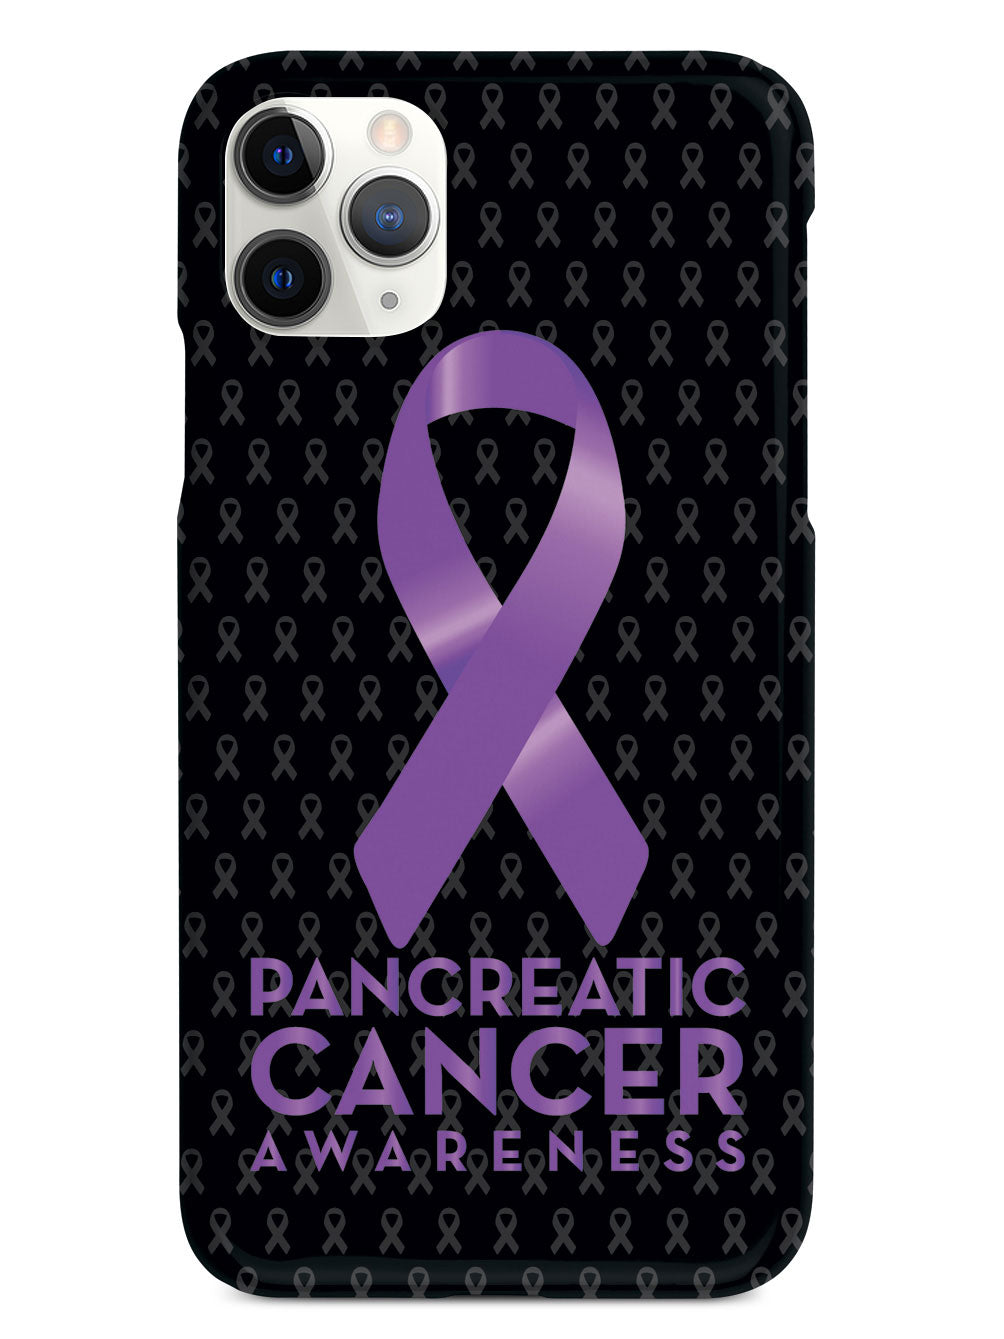 Pancreatic Cancer Awareness - Black Case